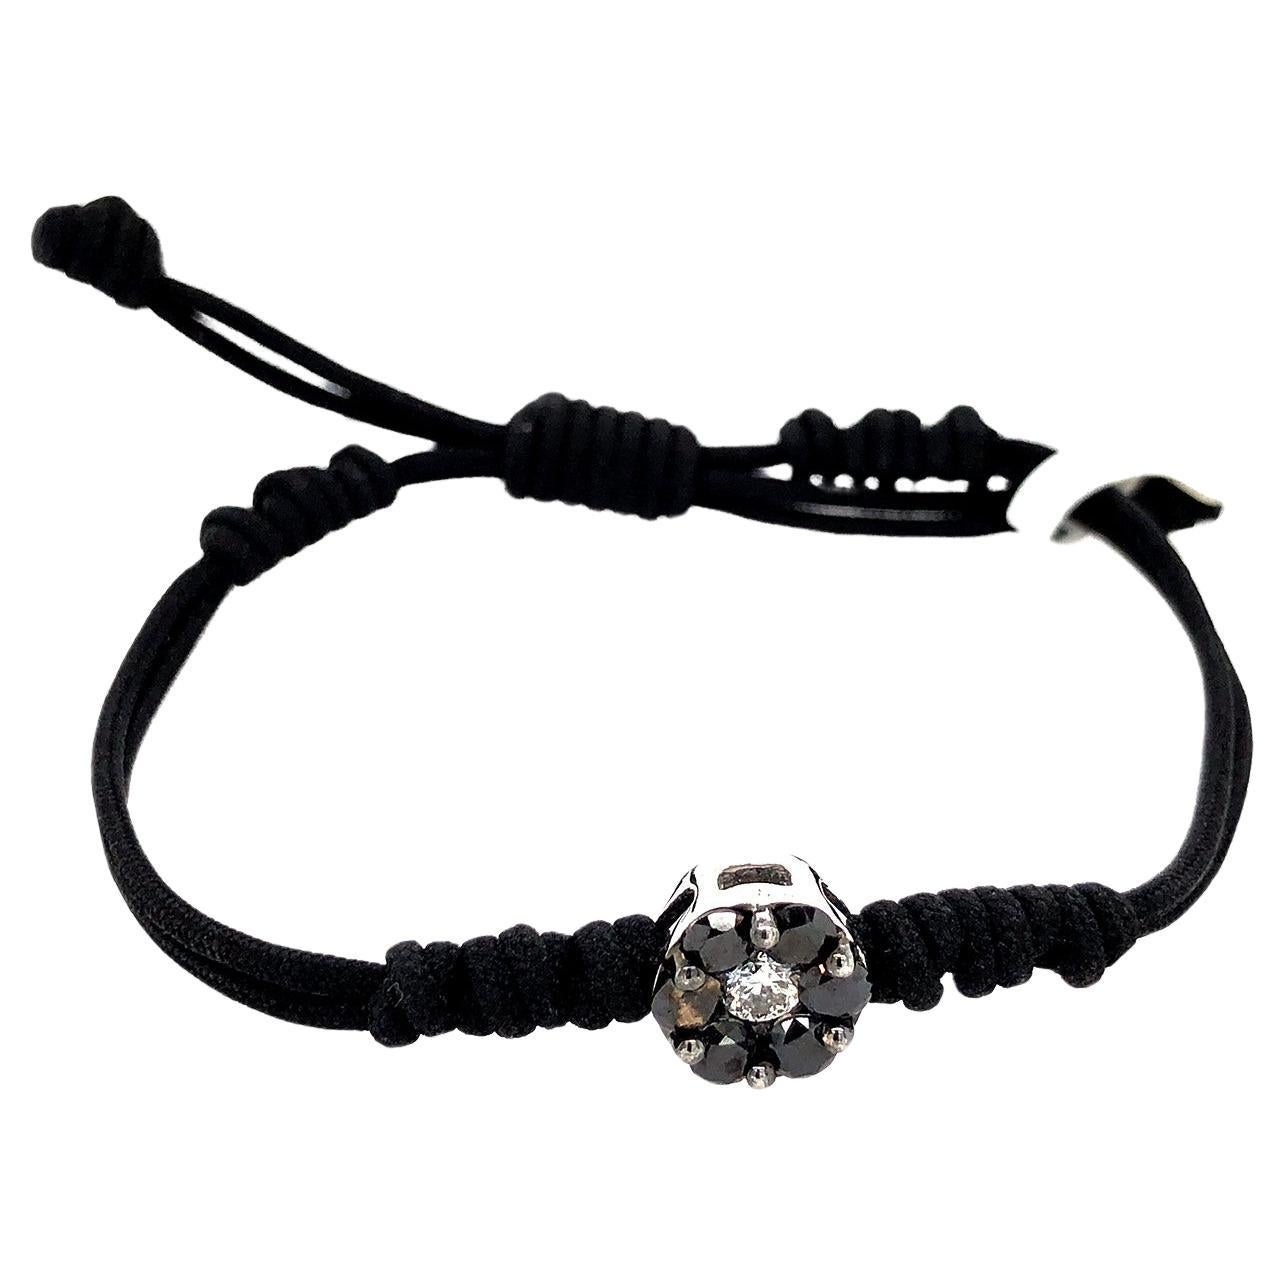 Handmade Macrame Adjustable Bracelet With Rose Cut Black Diamonds Charm